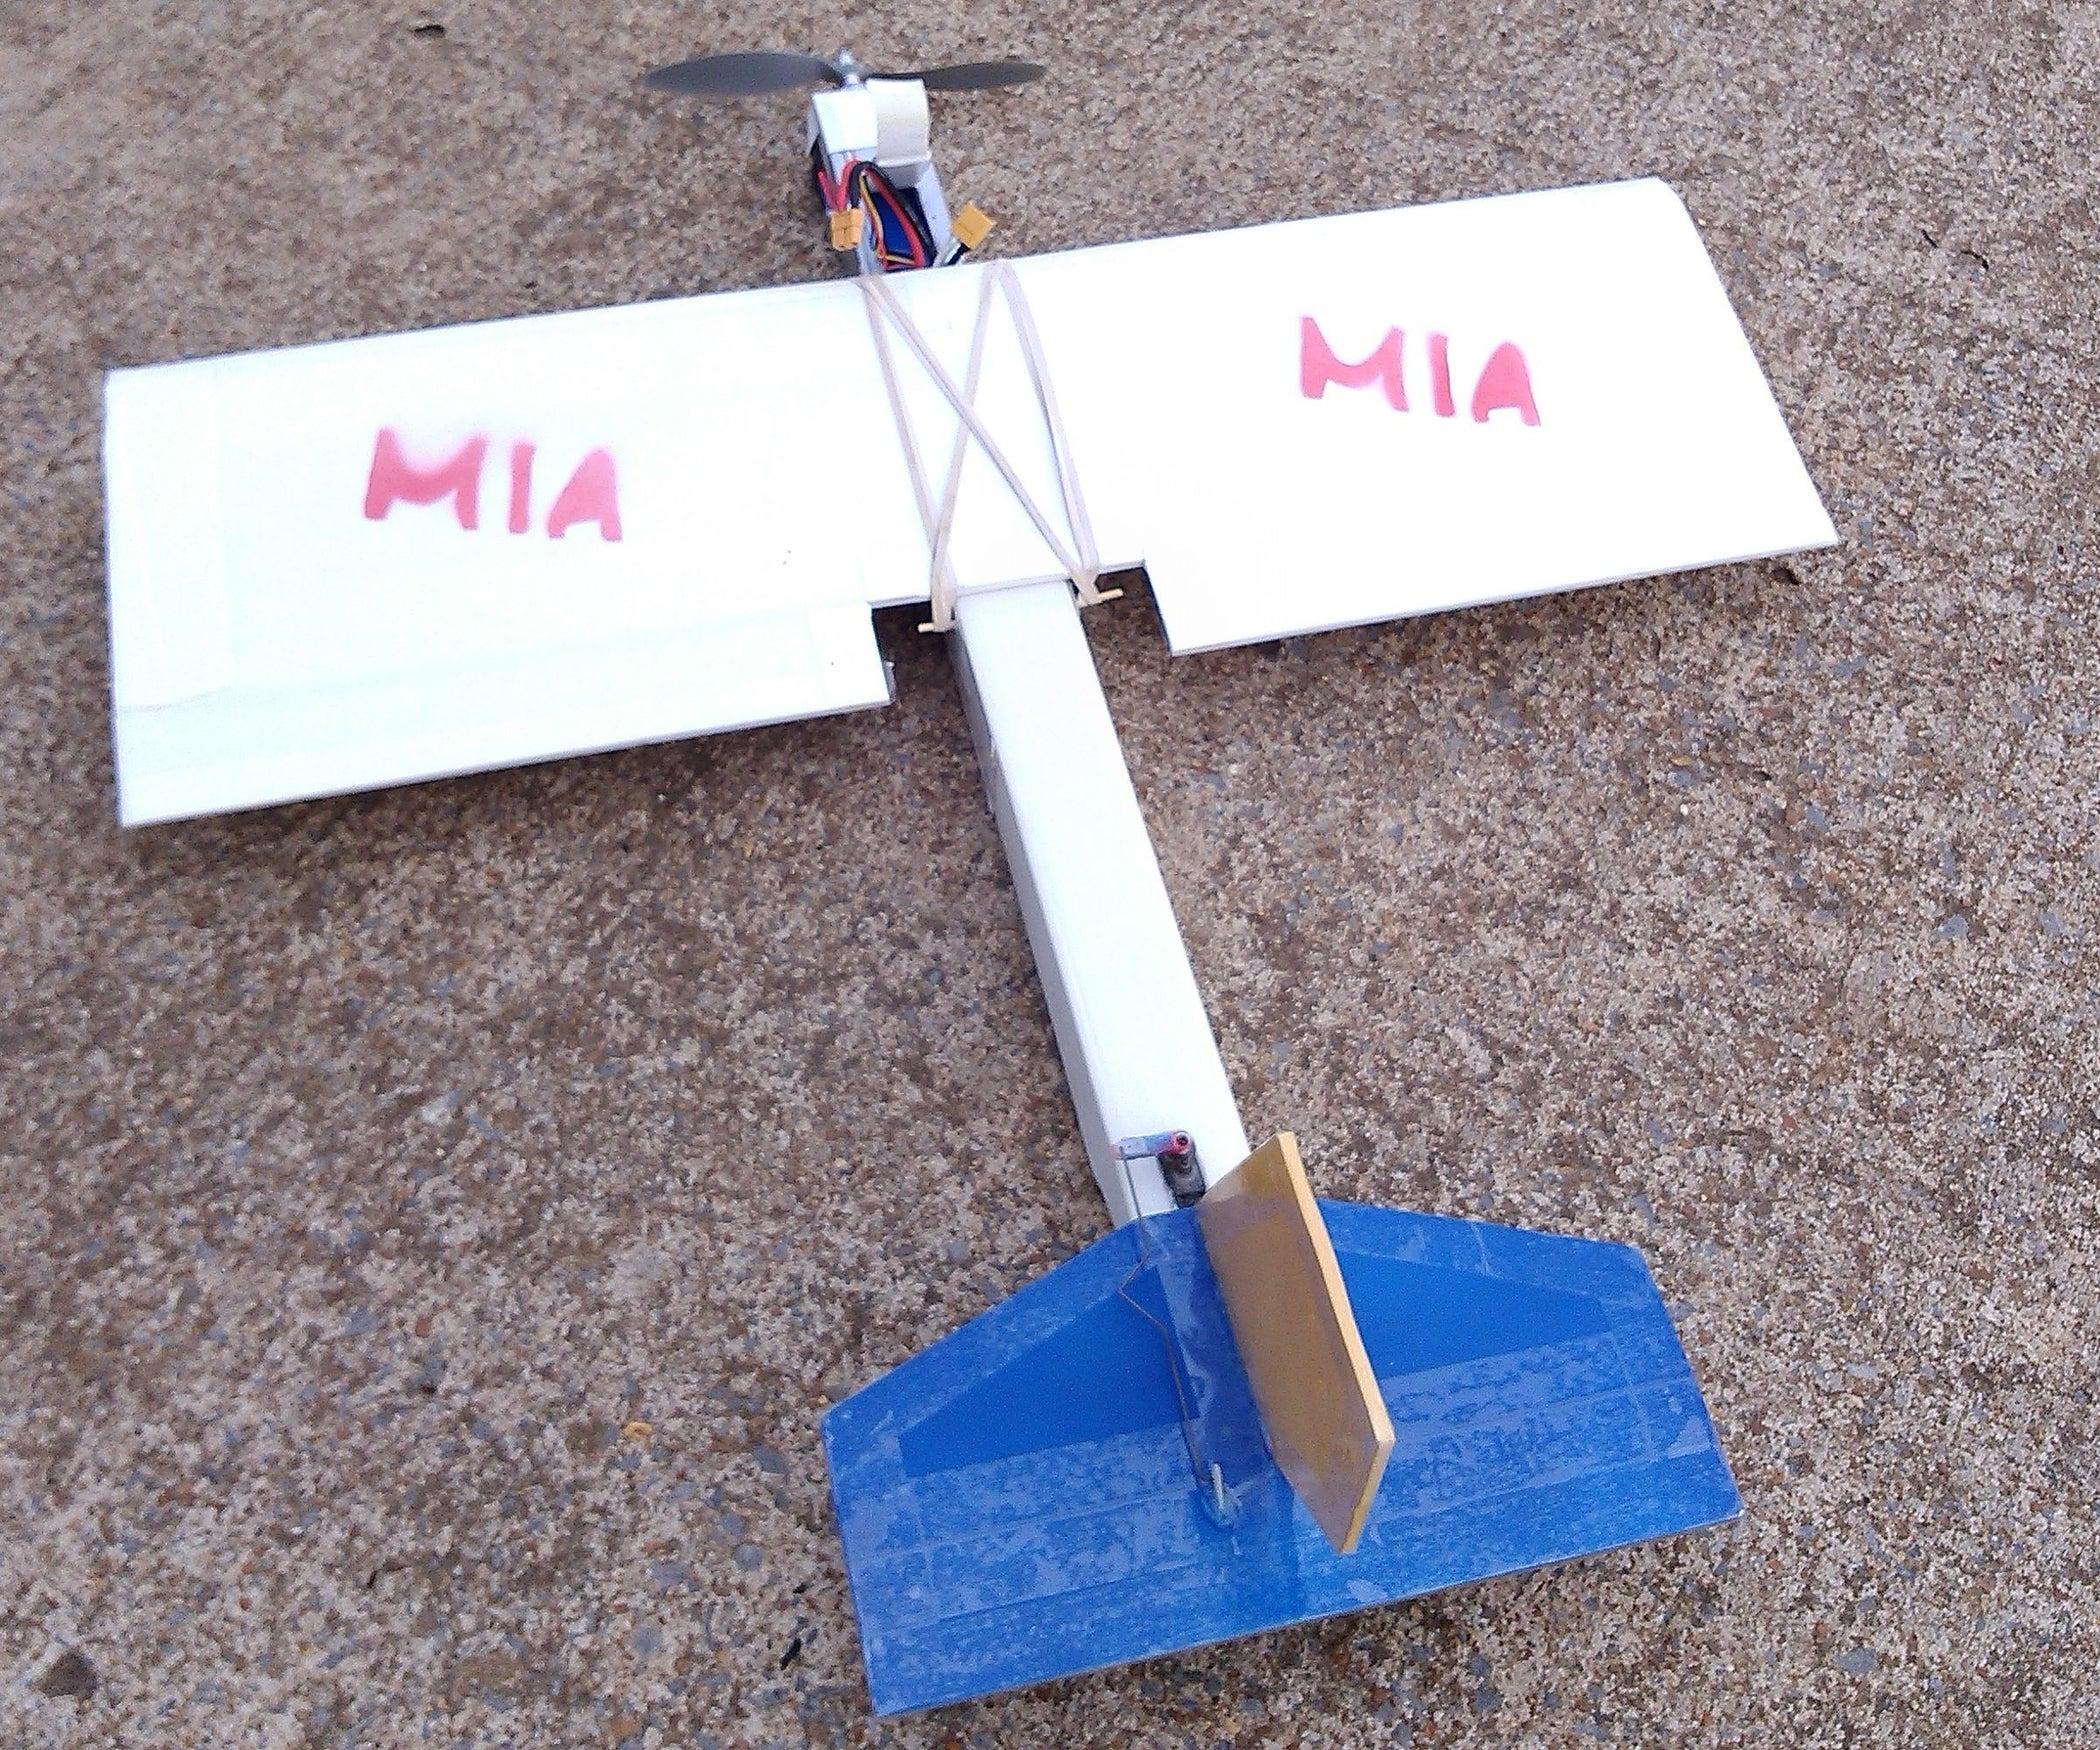 Foam Jet Plane: Building a Foam Jet Plane: A Straightforward DIY Project